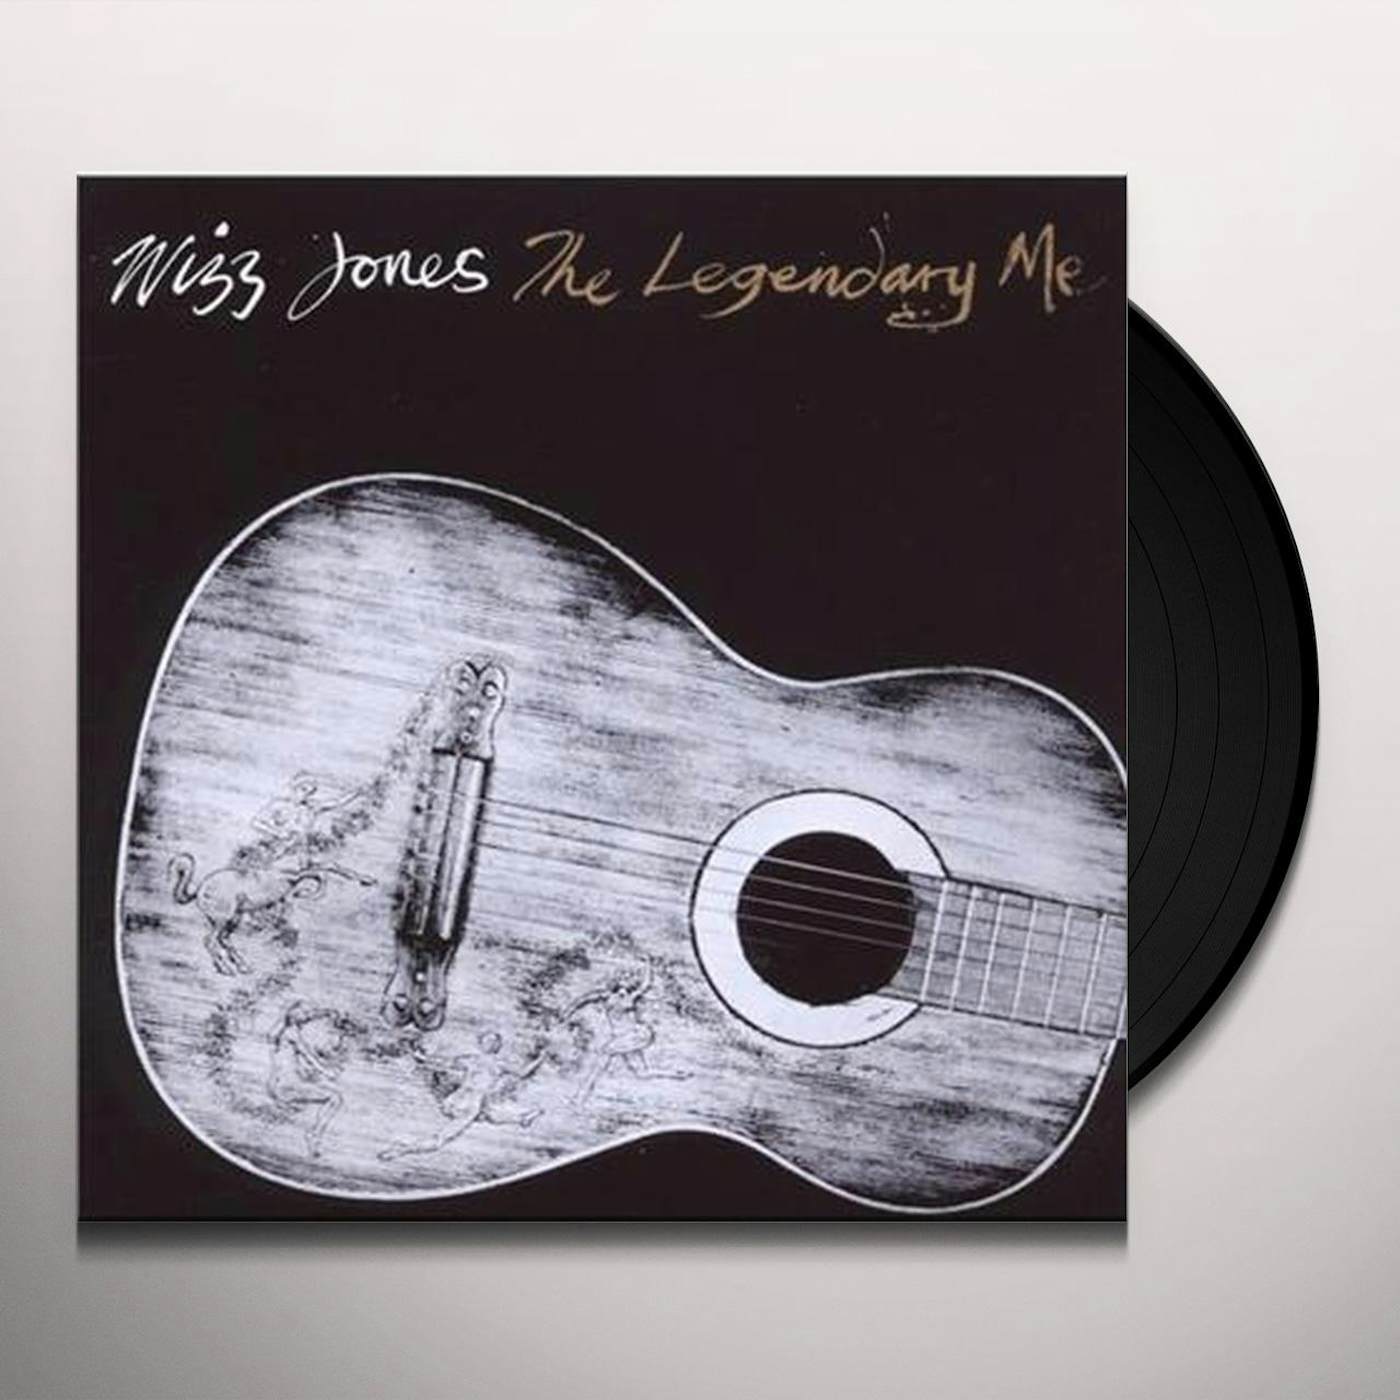 Wizz Jones LEGENDARY ME Vinyl Record - Reissue, Deluxe Edition, Special Packaging